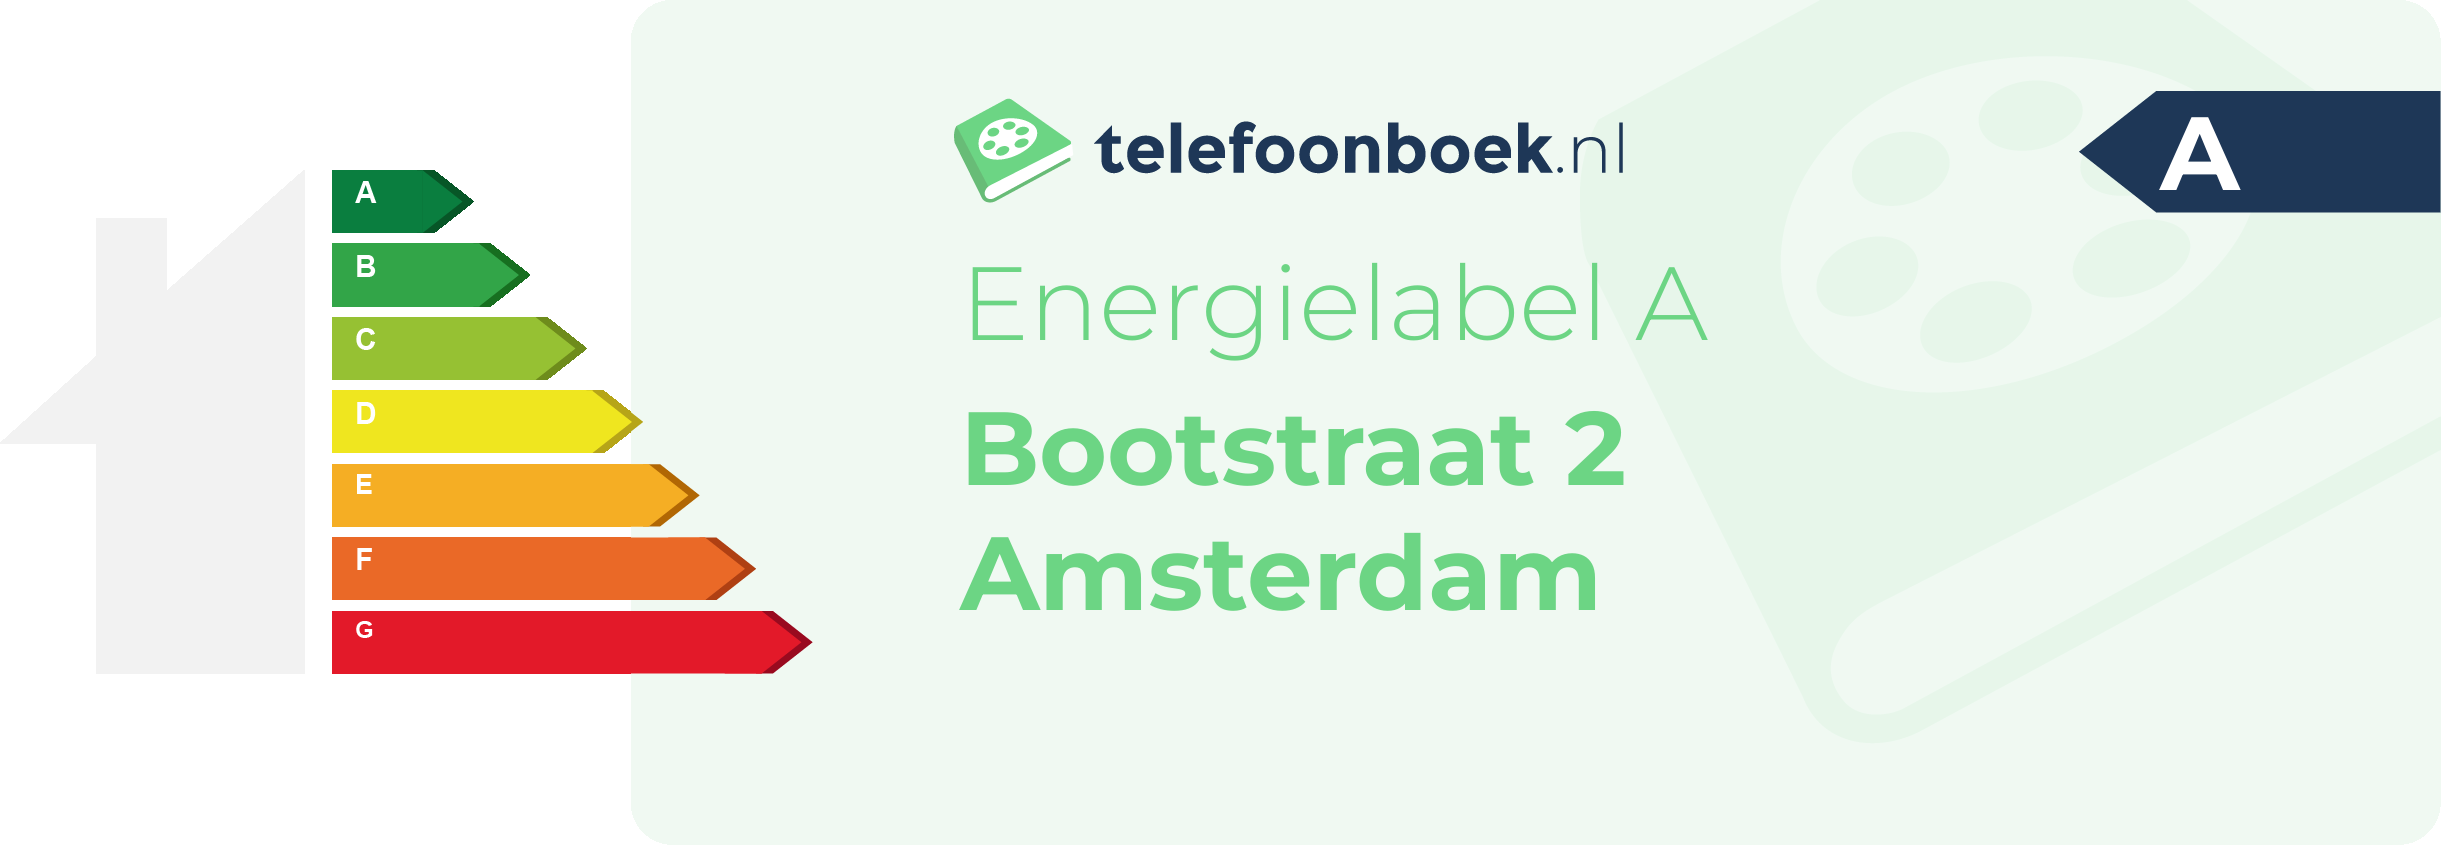 Energielabel Bootstraat 2 Amsterdam